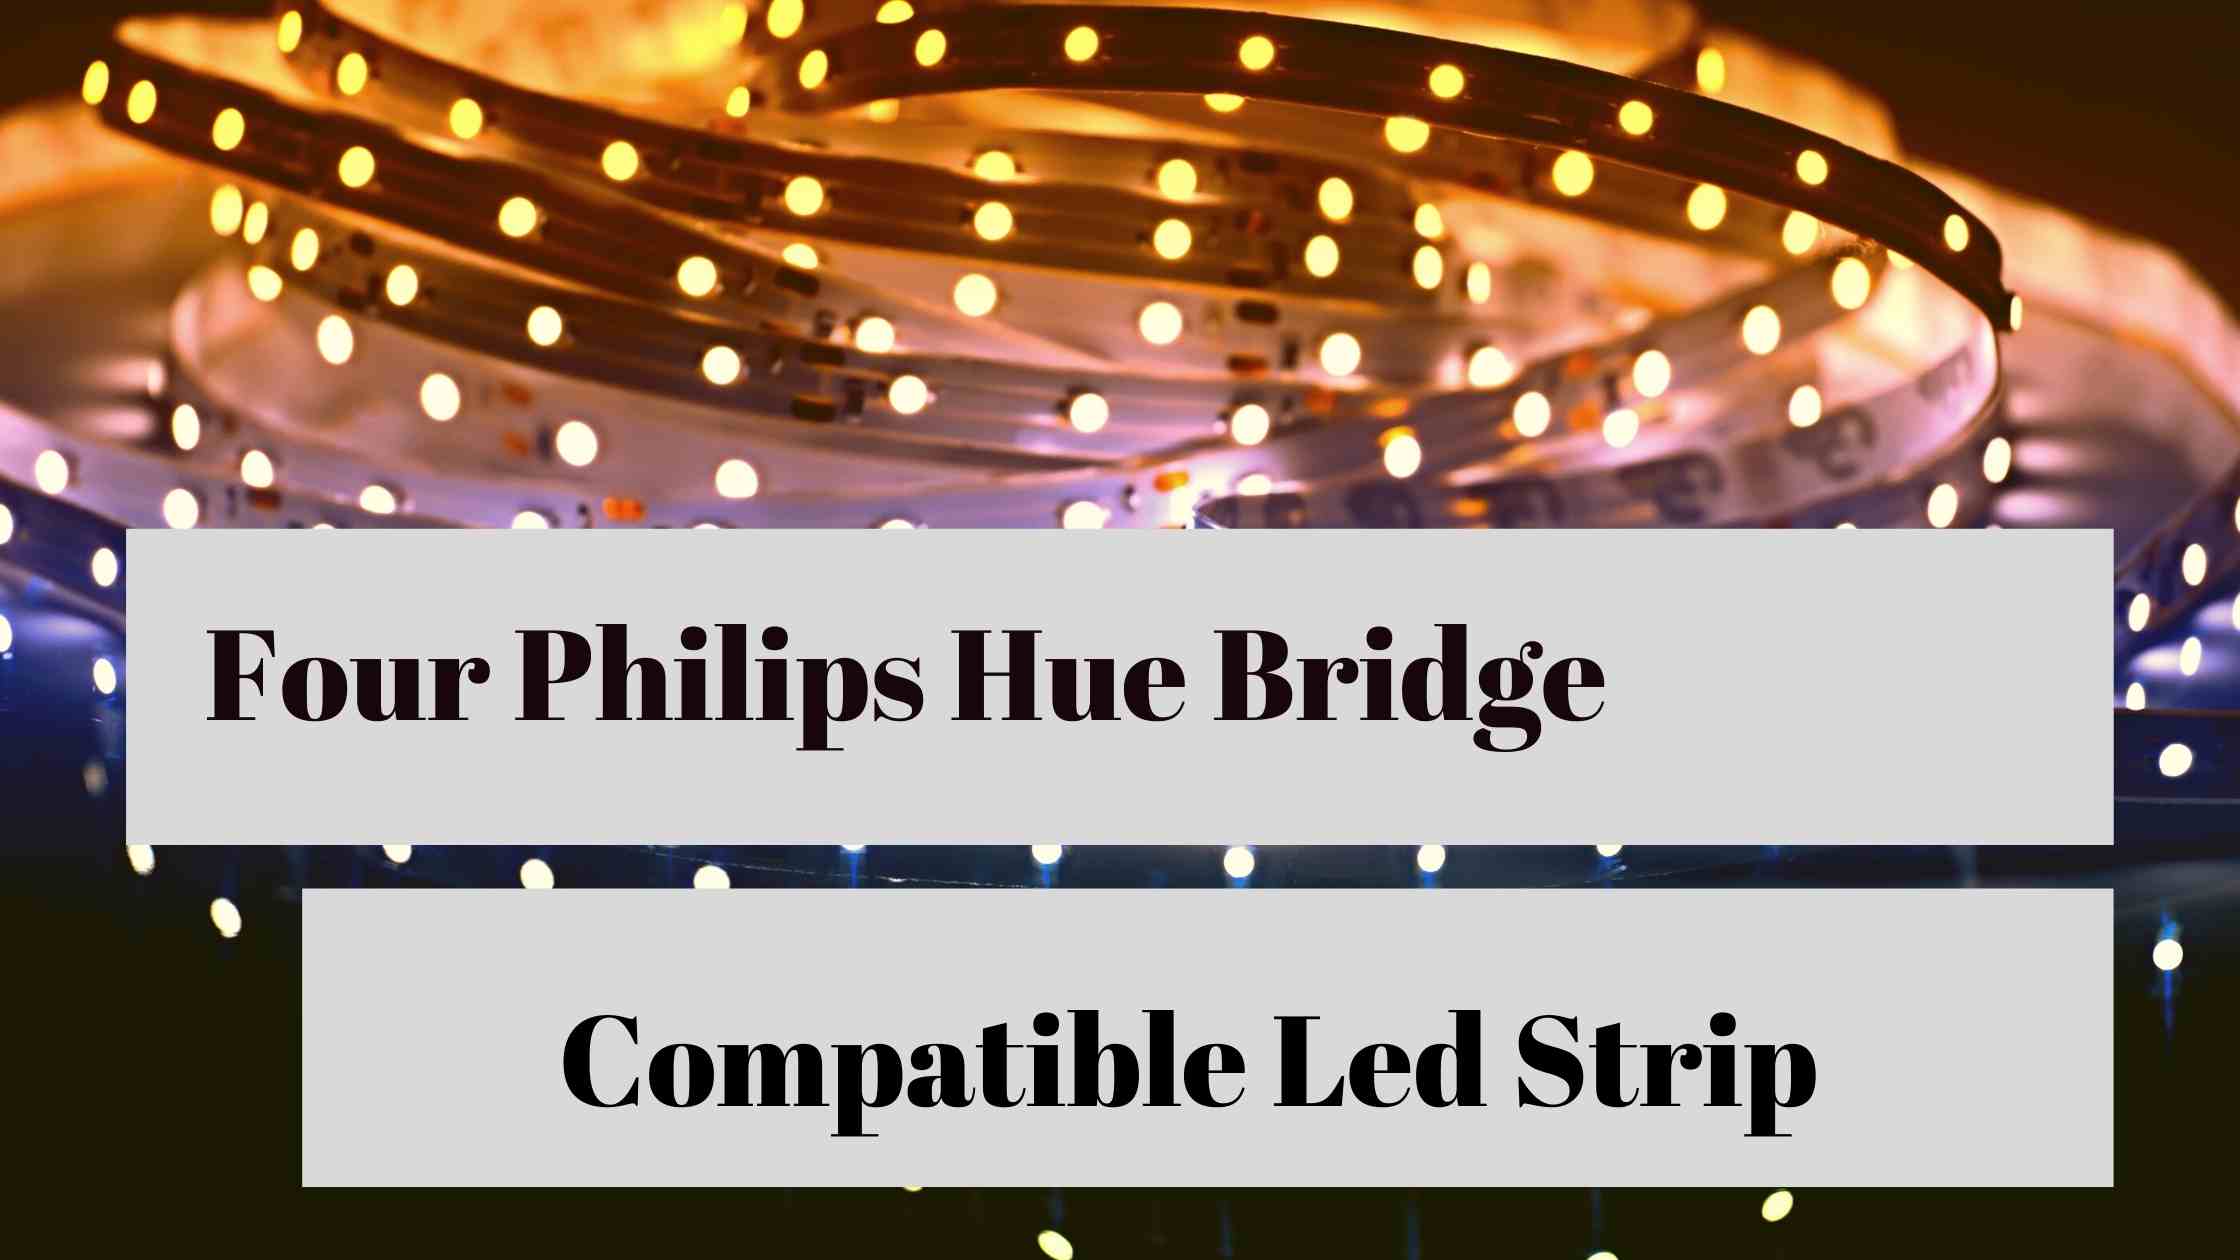 Philips Hue Bridge Compatible Led Strip